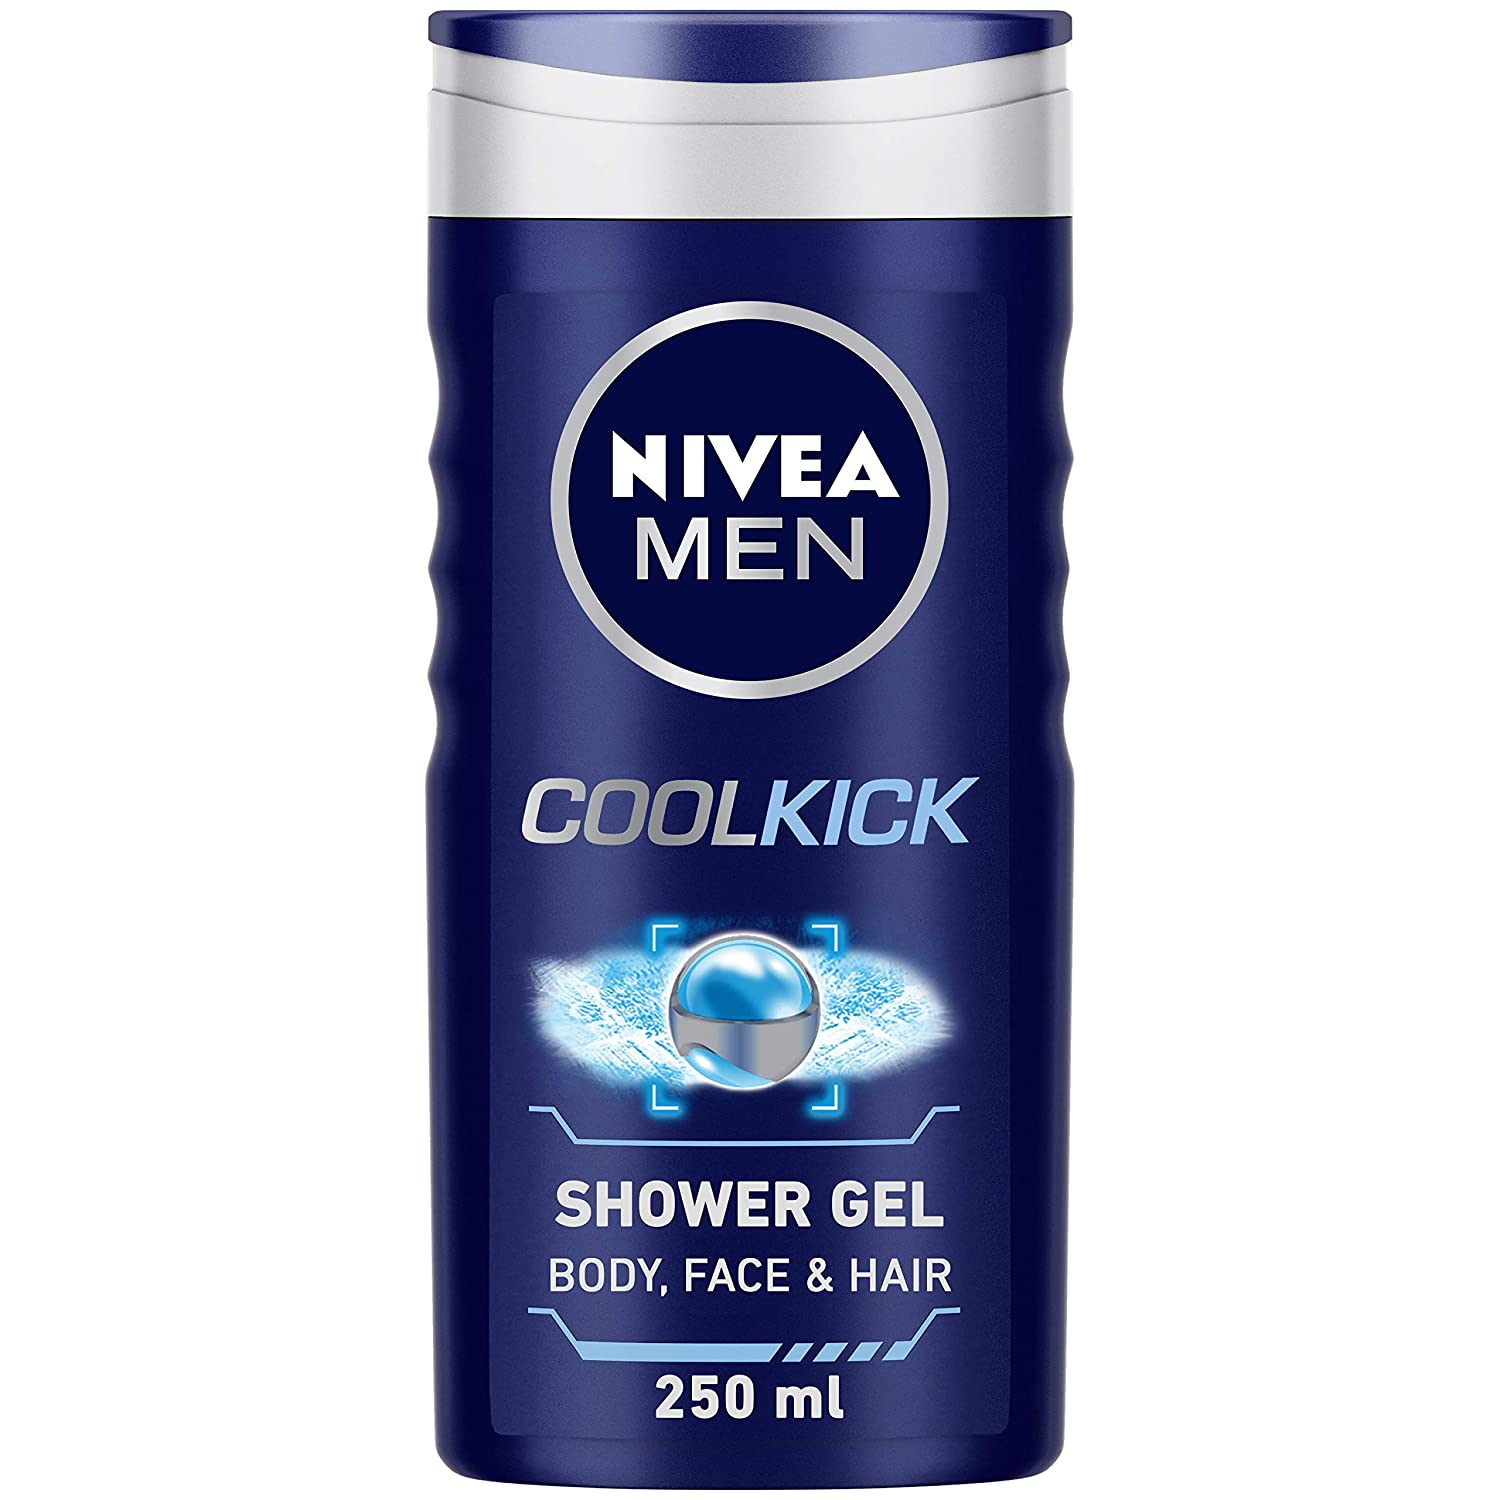 Nivea Men CoolKick Shower Gel Body, Face & Hair